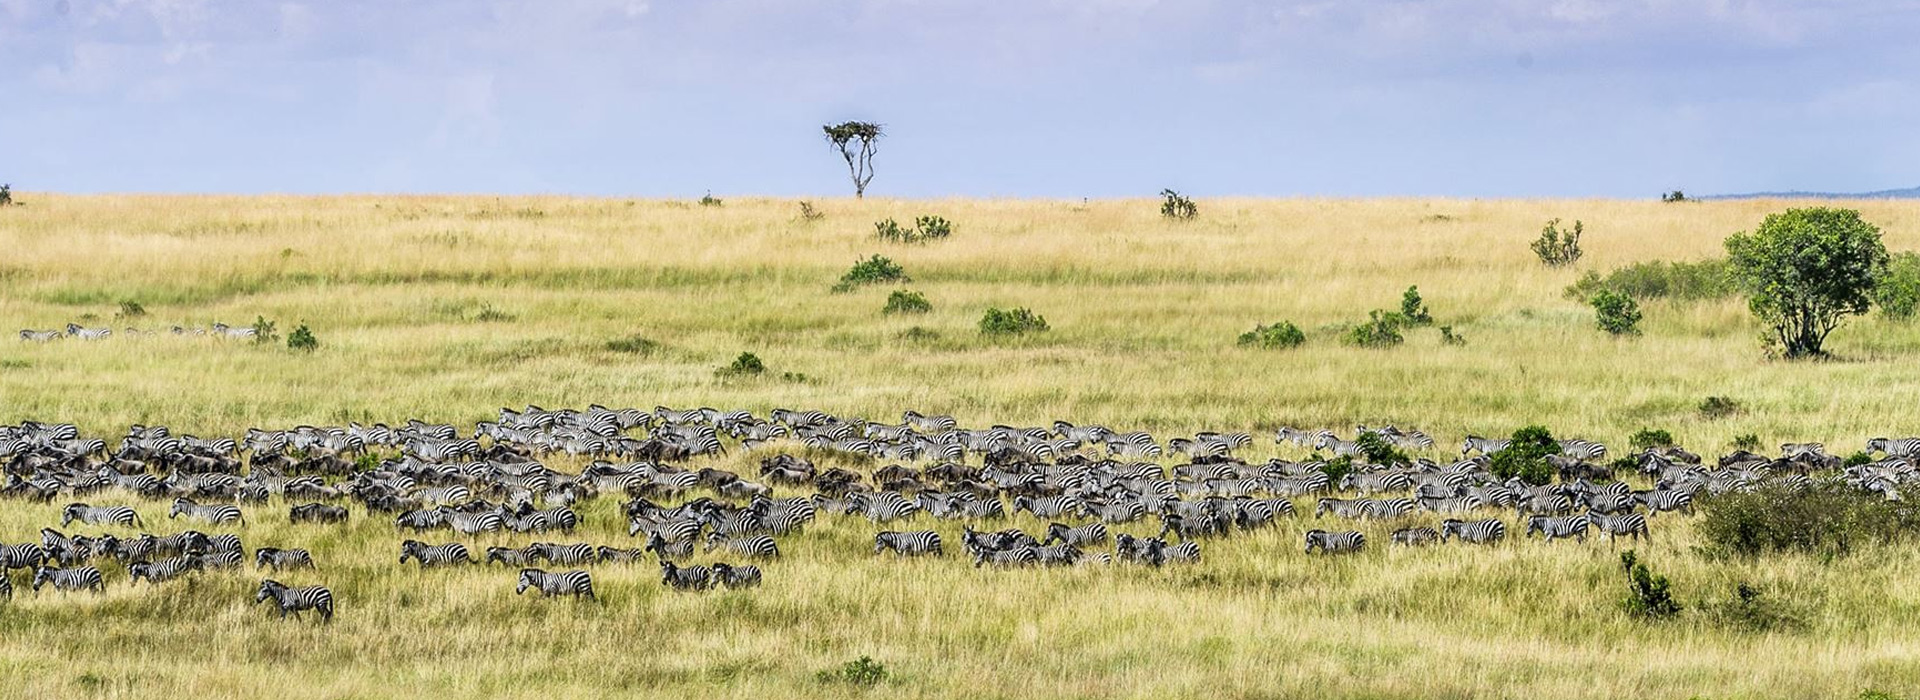 Best Time to Visit Kenya Safari